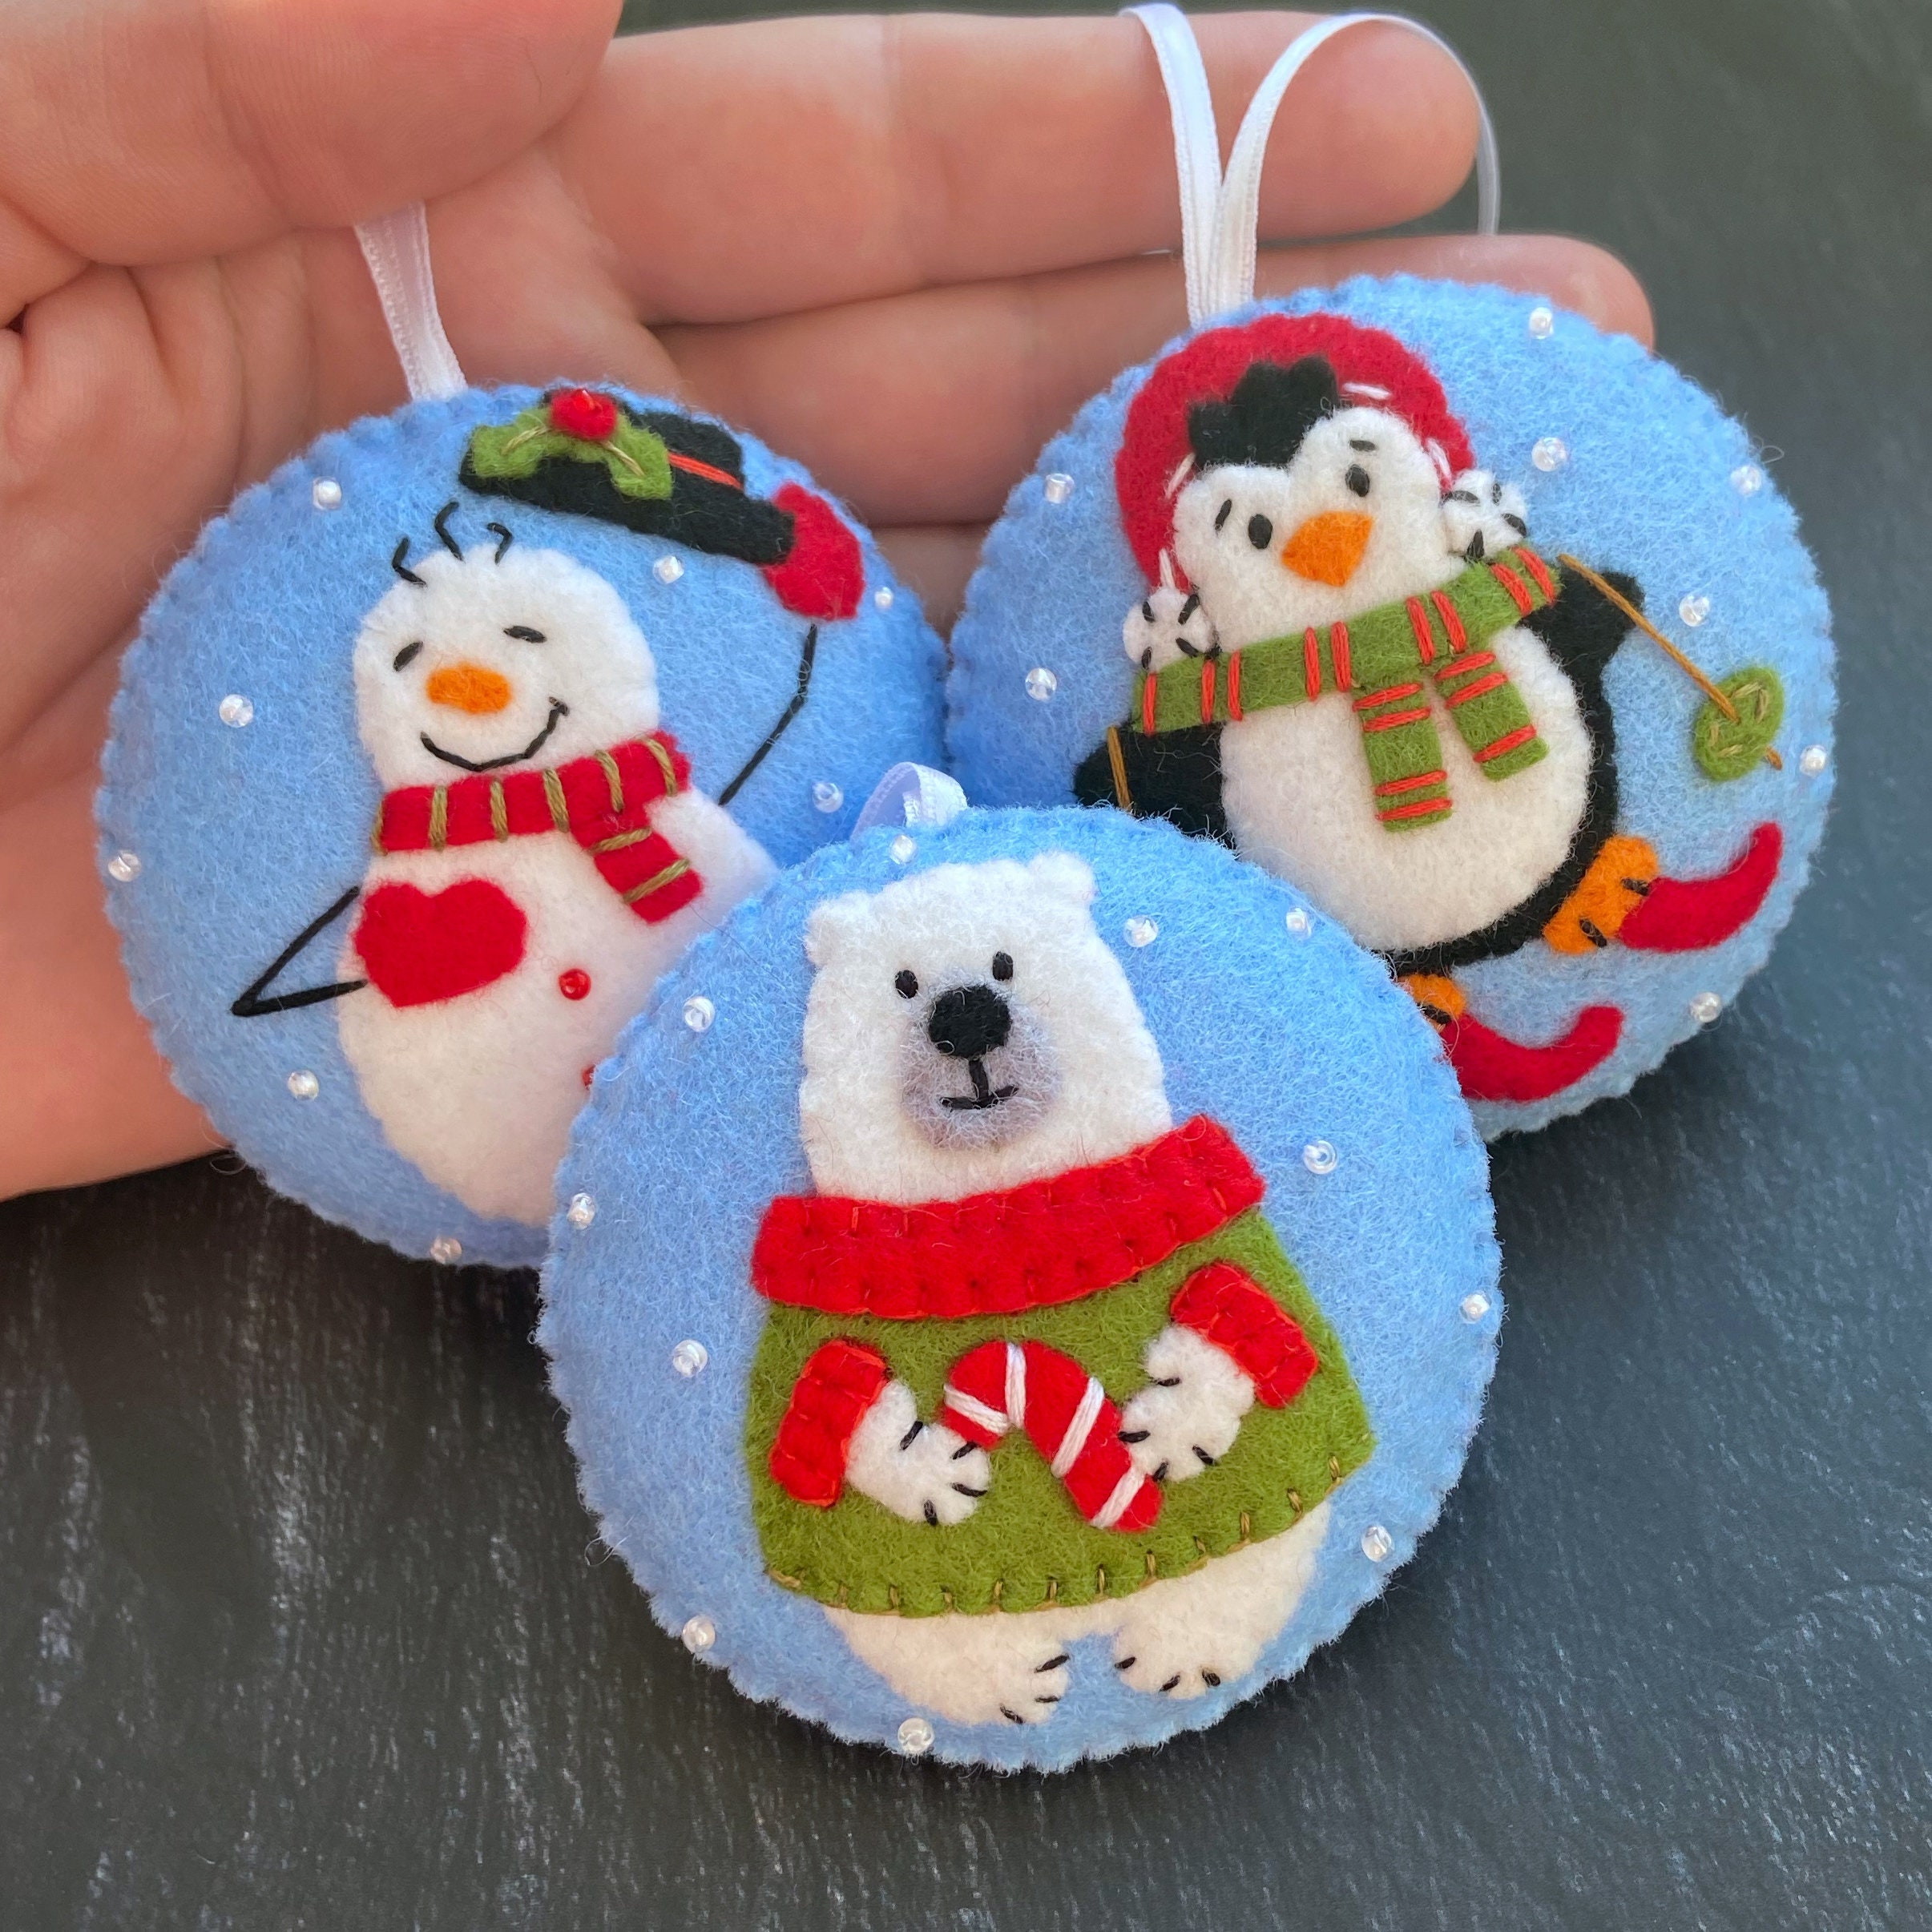 Felt Snowman, iMounTEK DIY Felt Christmas Ornaments Kits Hanging Decorations with 54pcs Detachable Ornaments